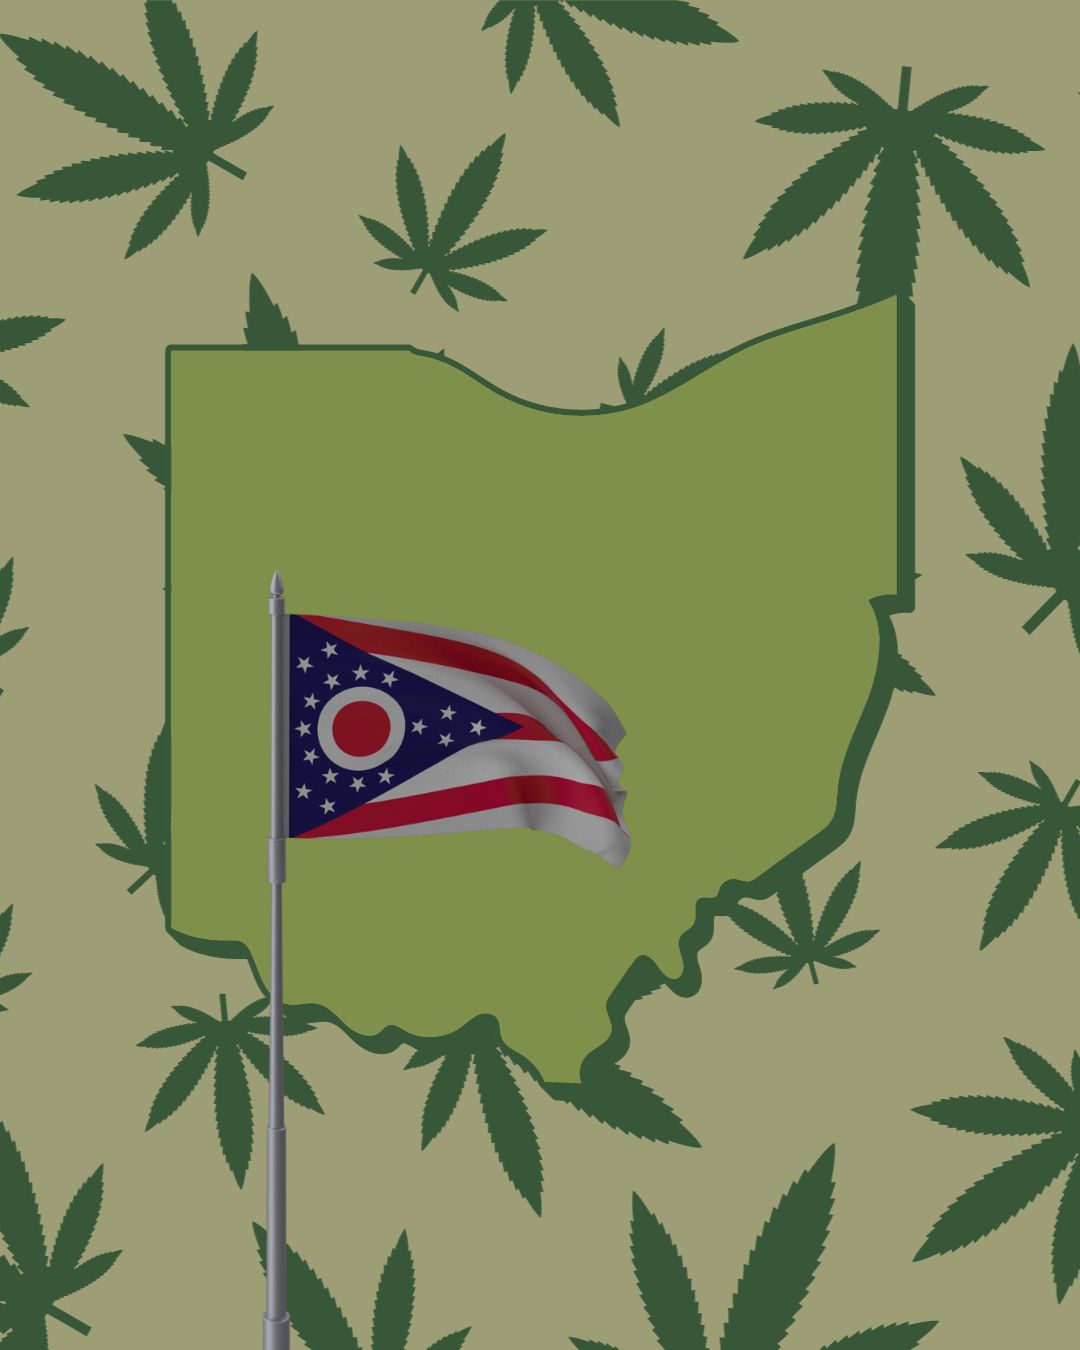 Ohio cannabis legalization